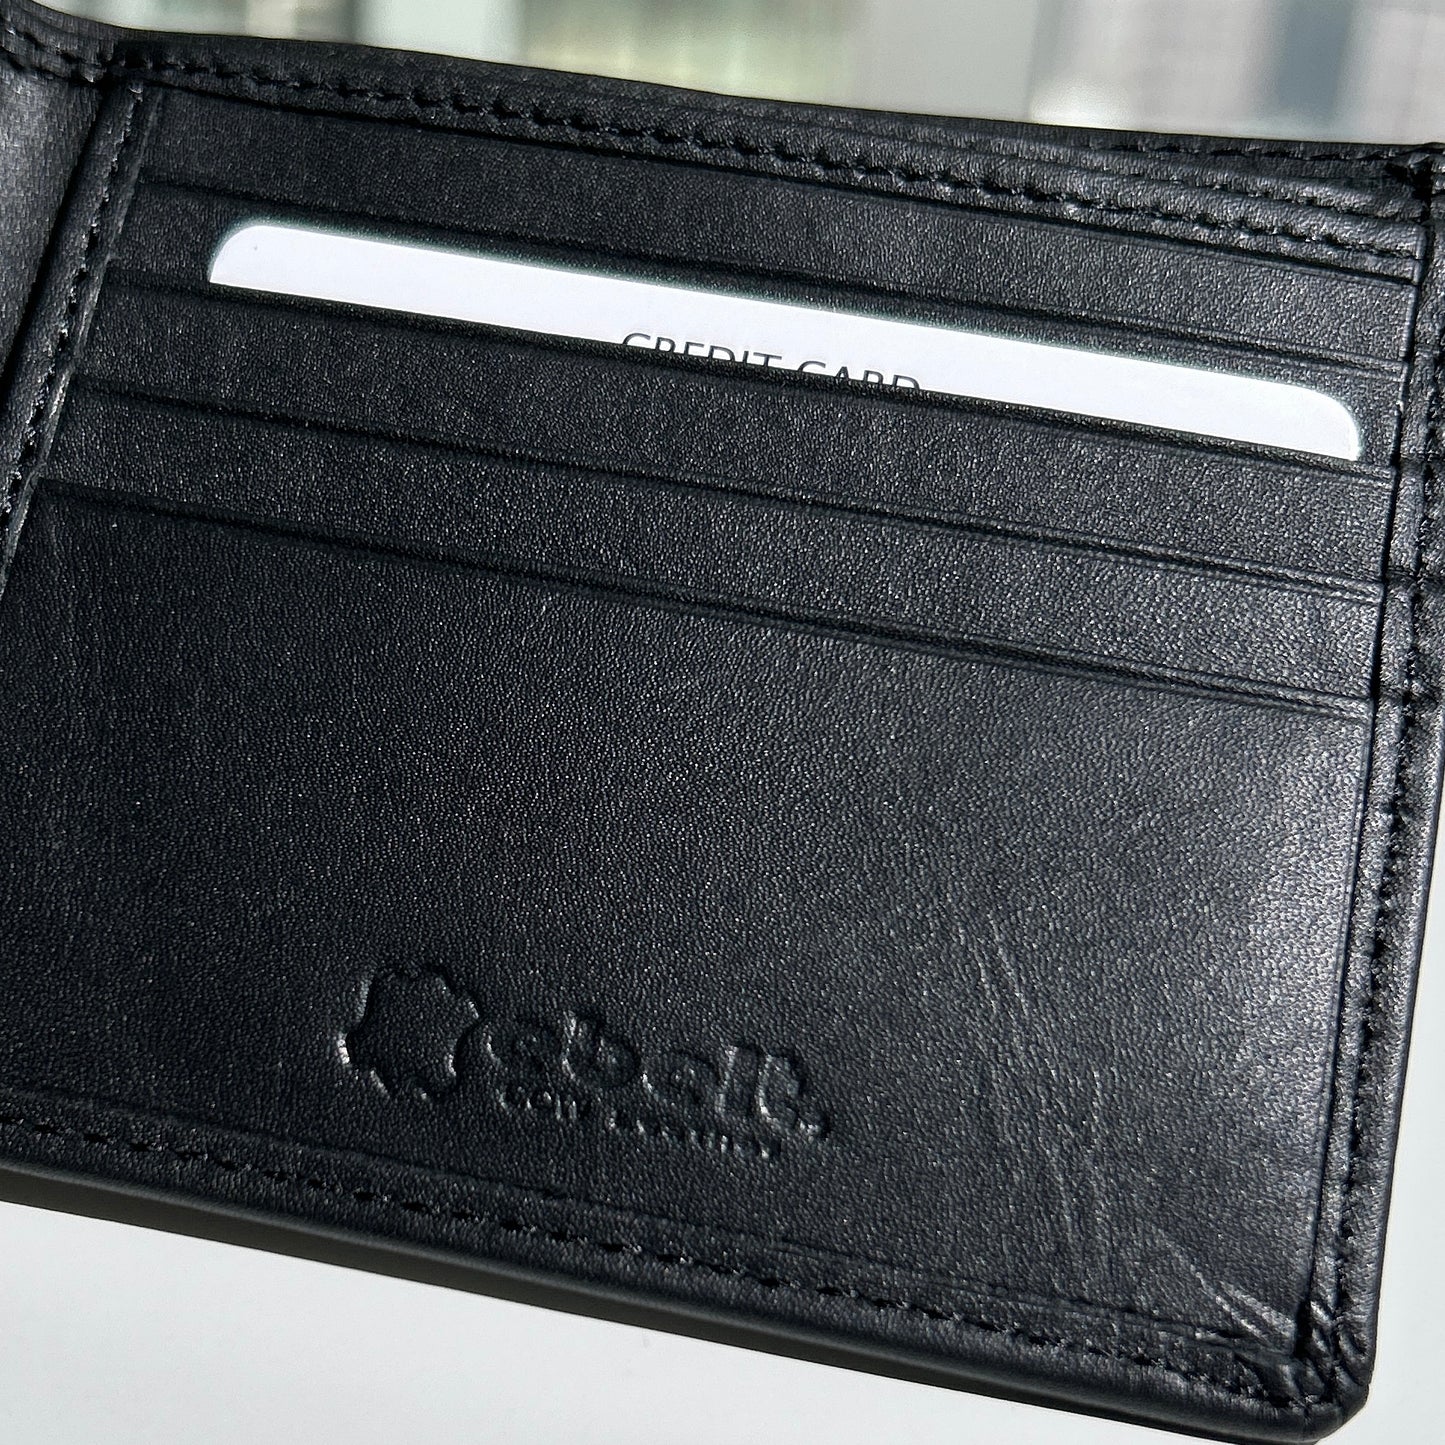 WM129X - Cow leather wallet 印度製頭層牛皮銀包